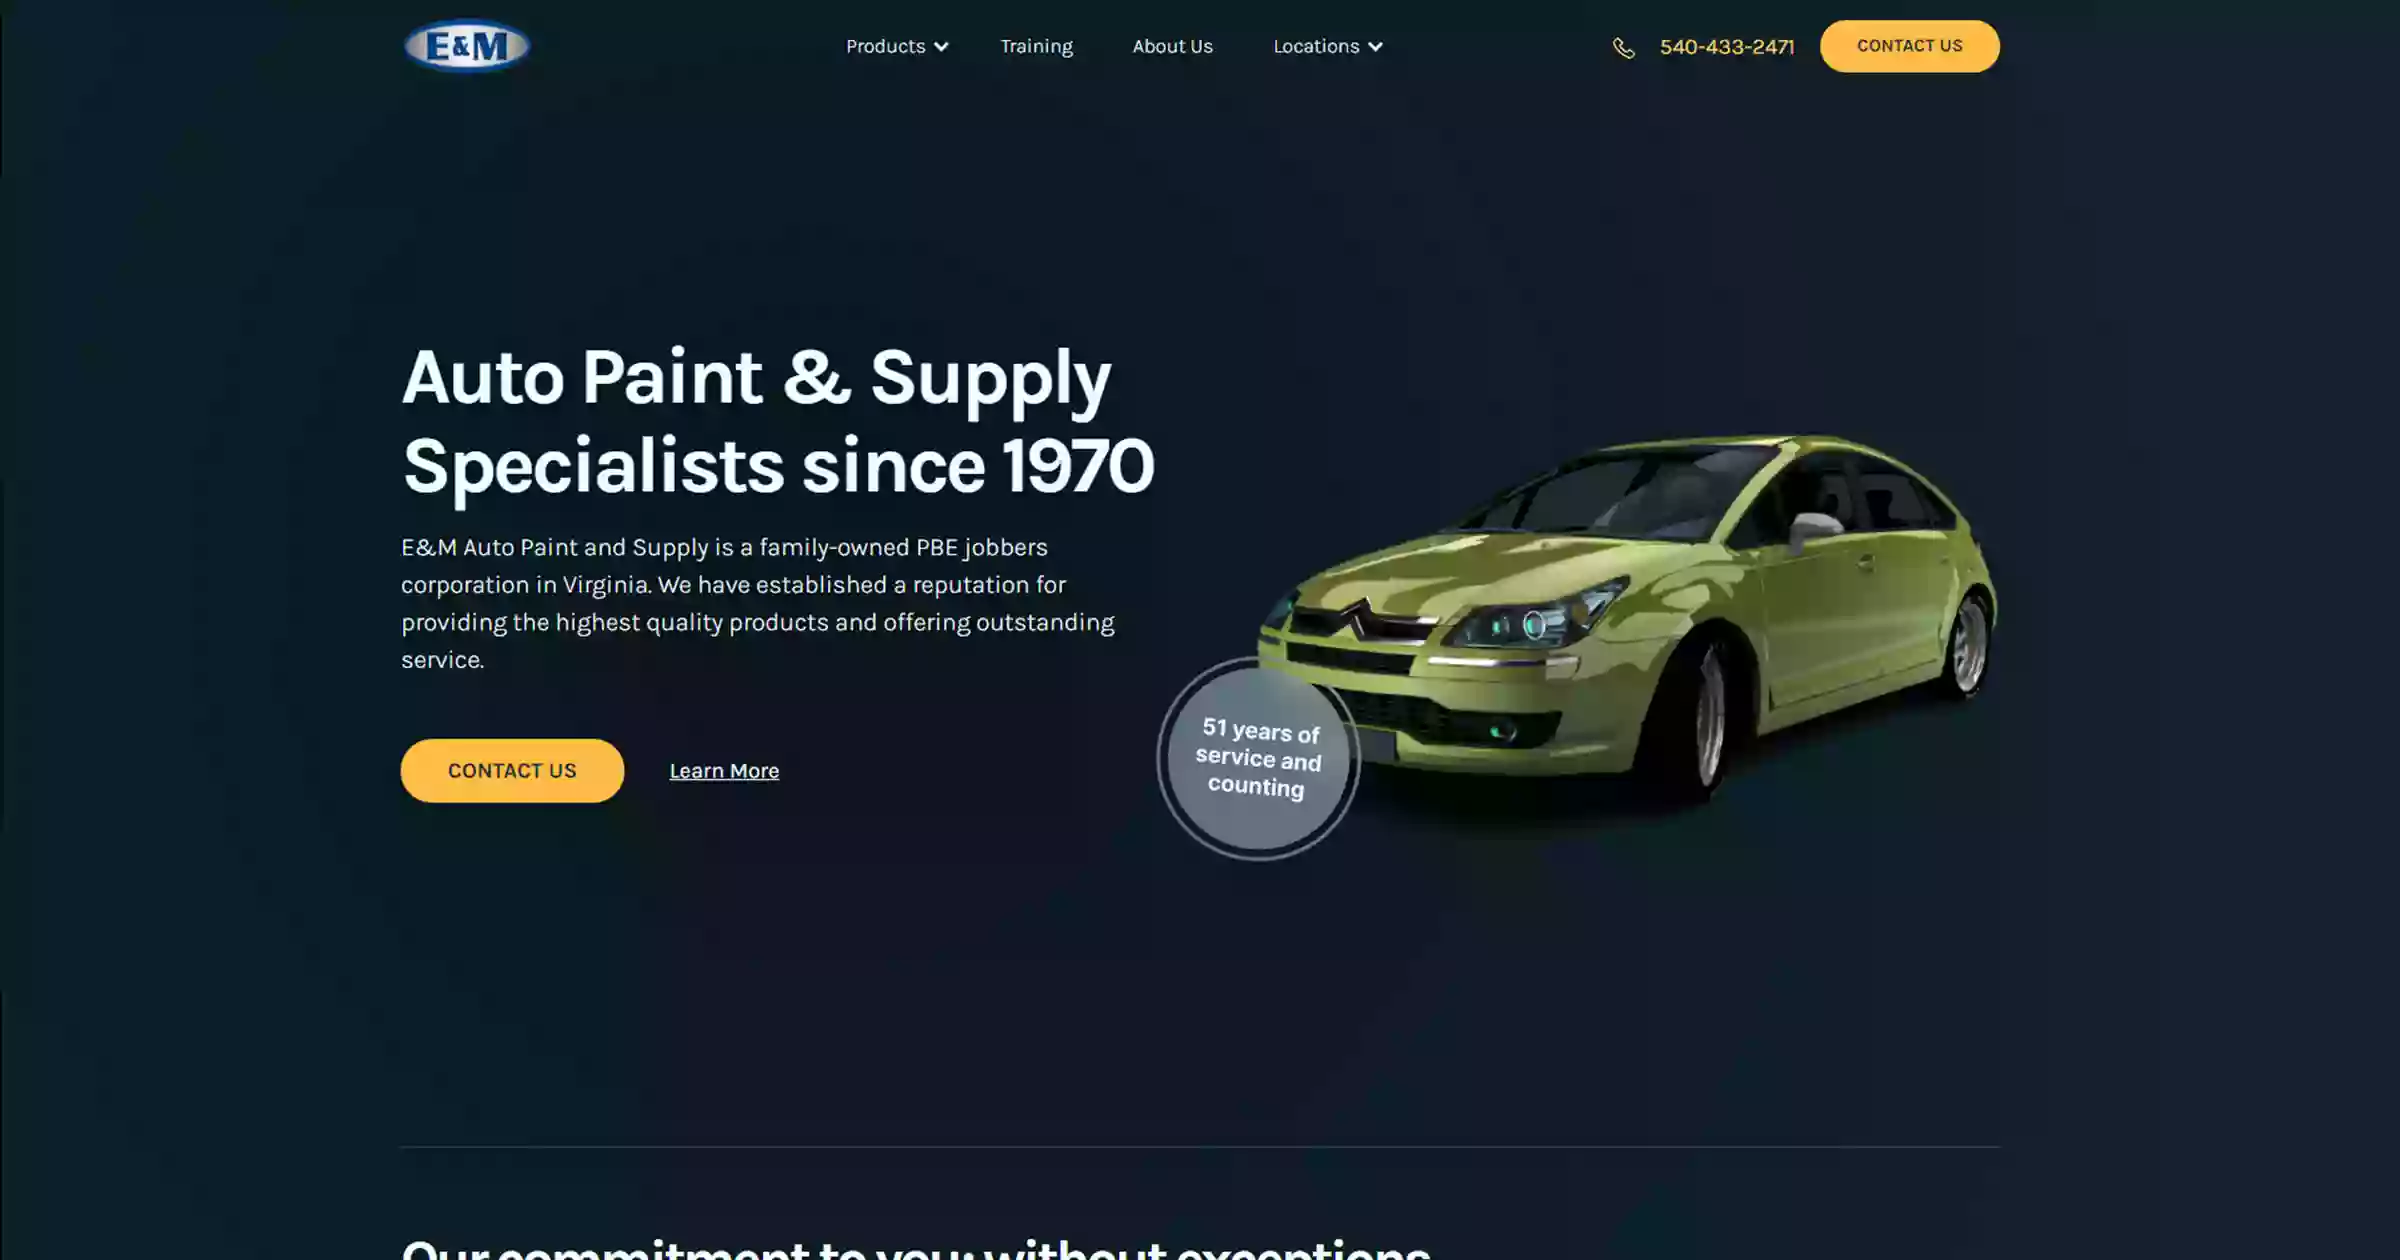 E & M Auto Paint & Supply Corporation